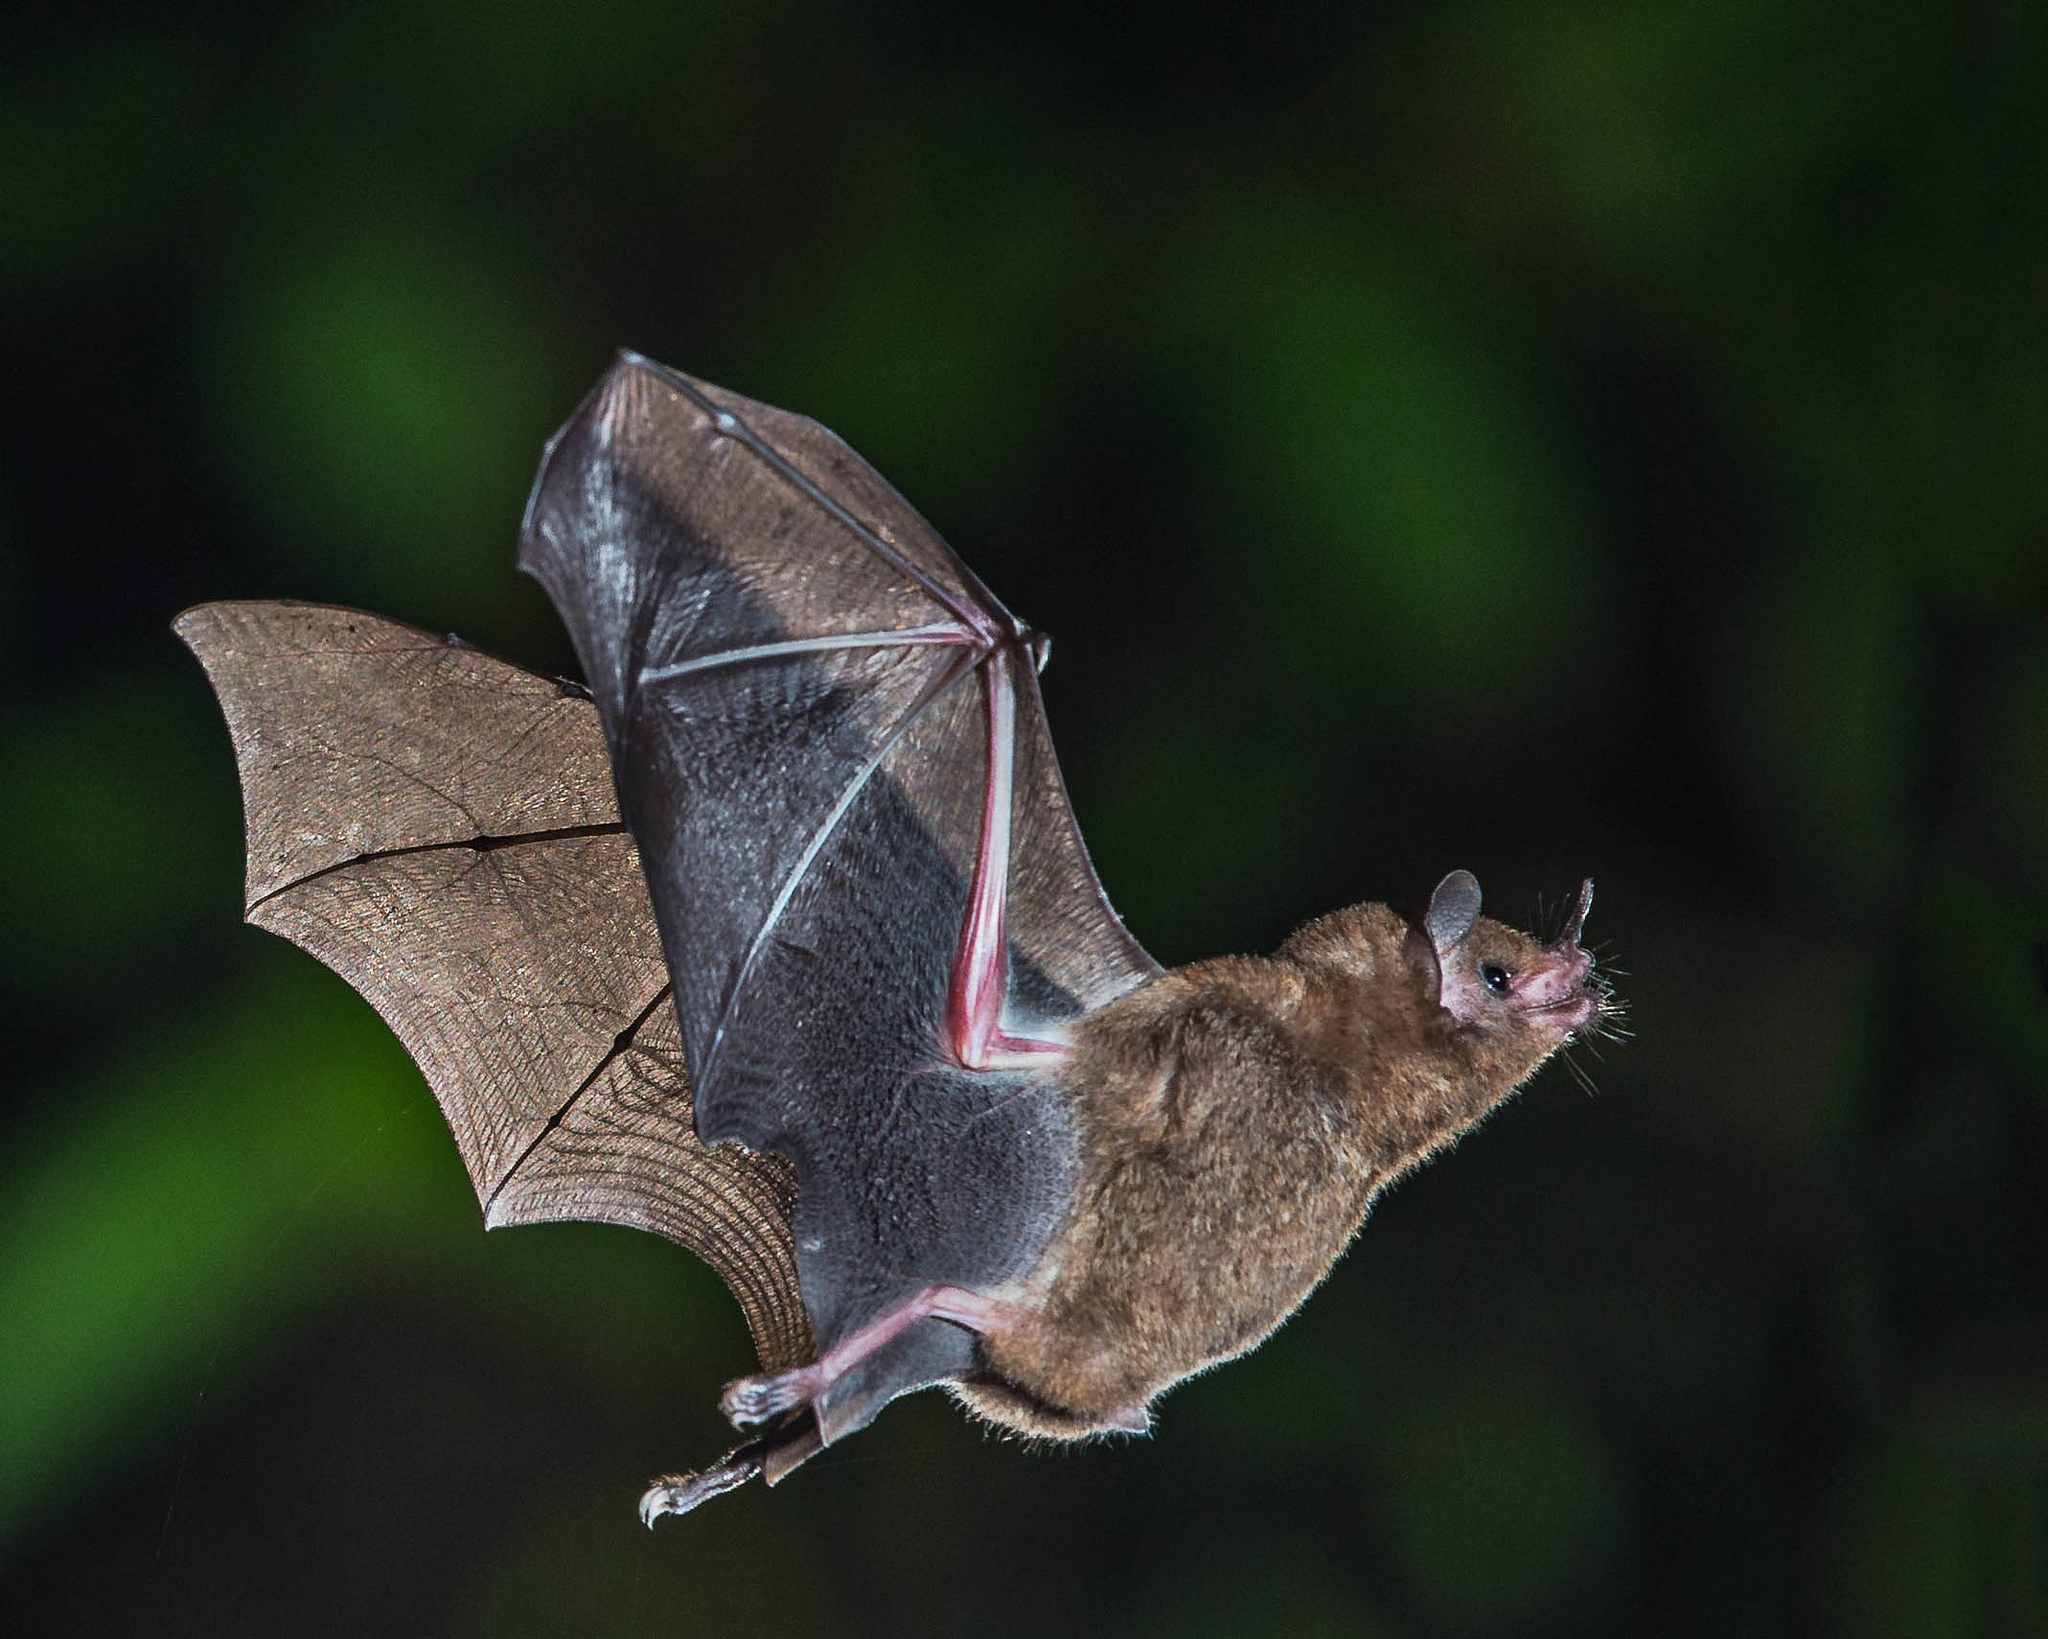 Short-tailed fruit bat